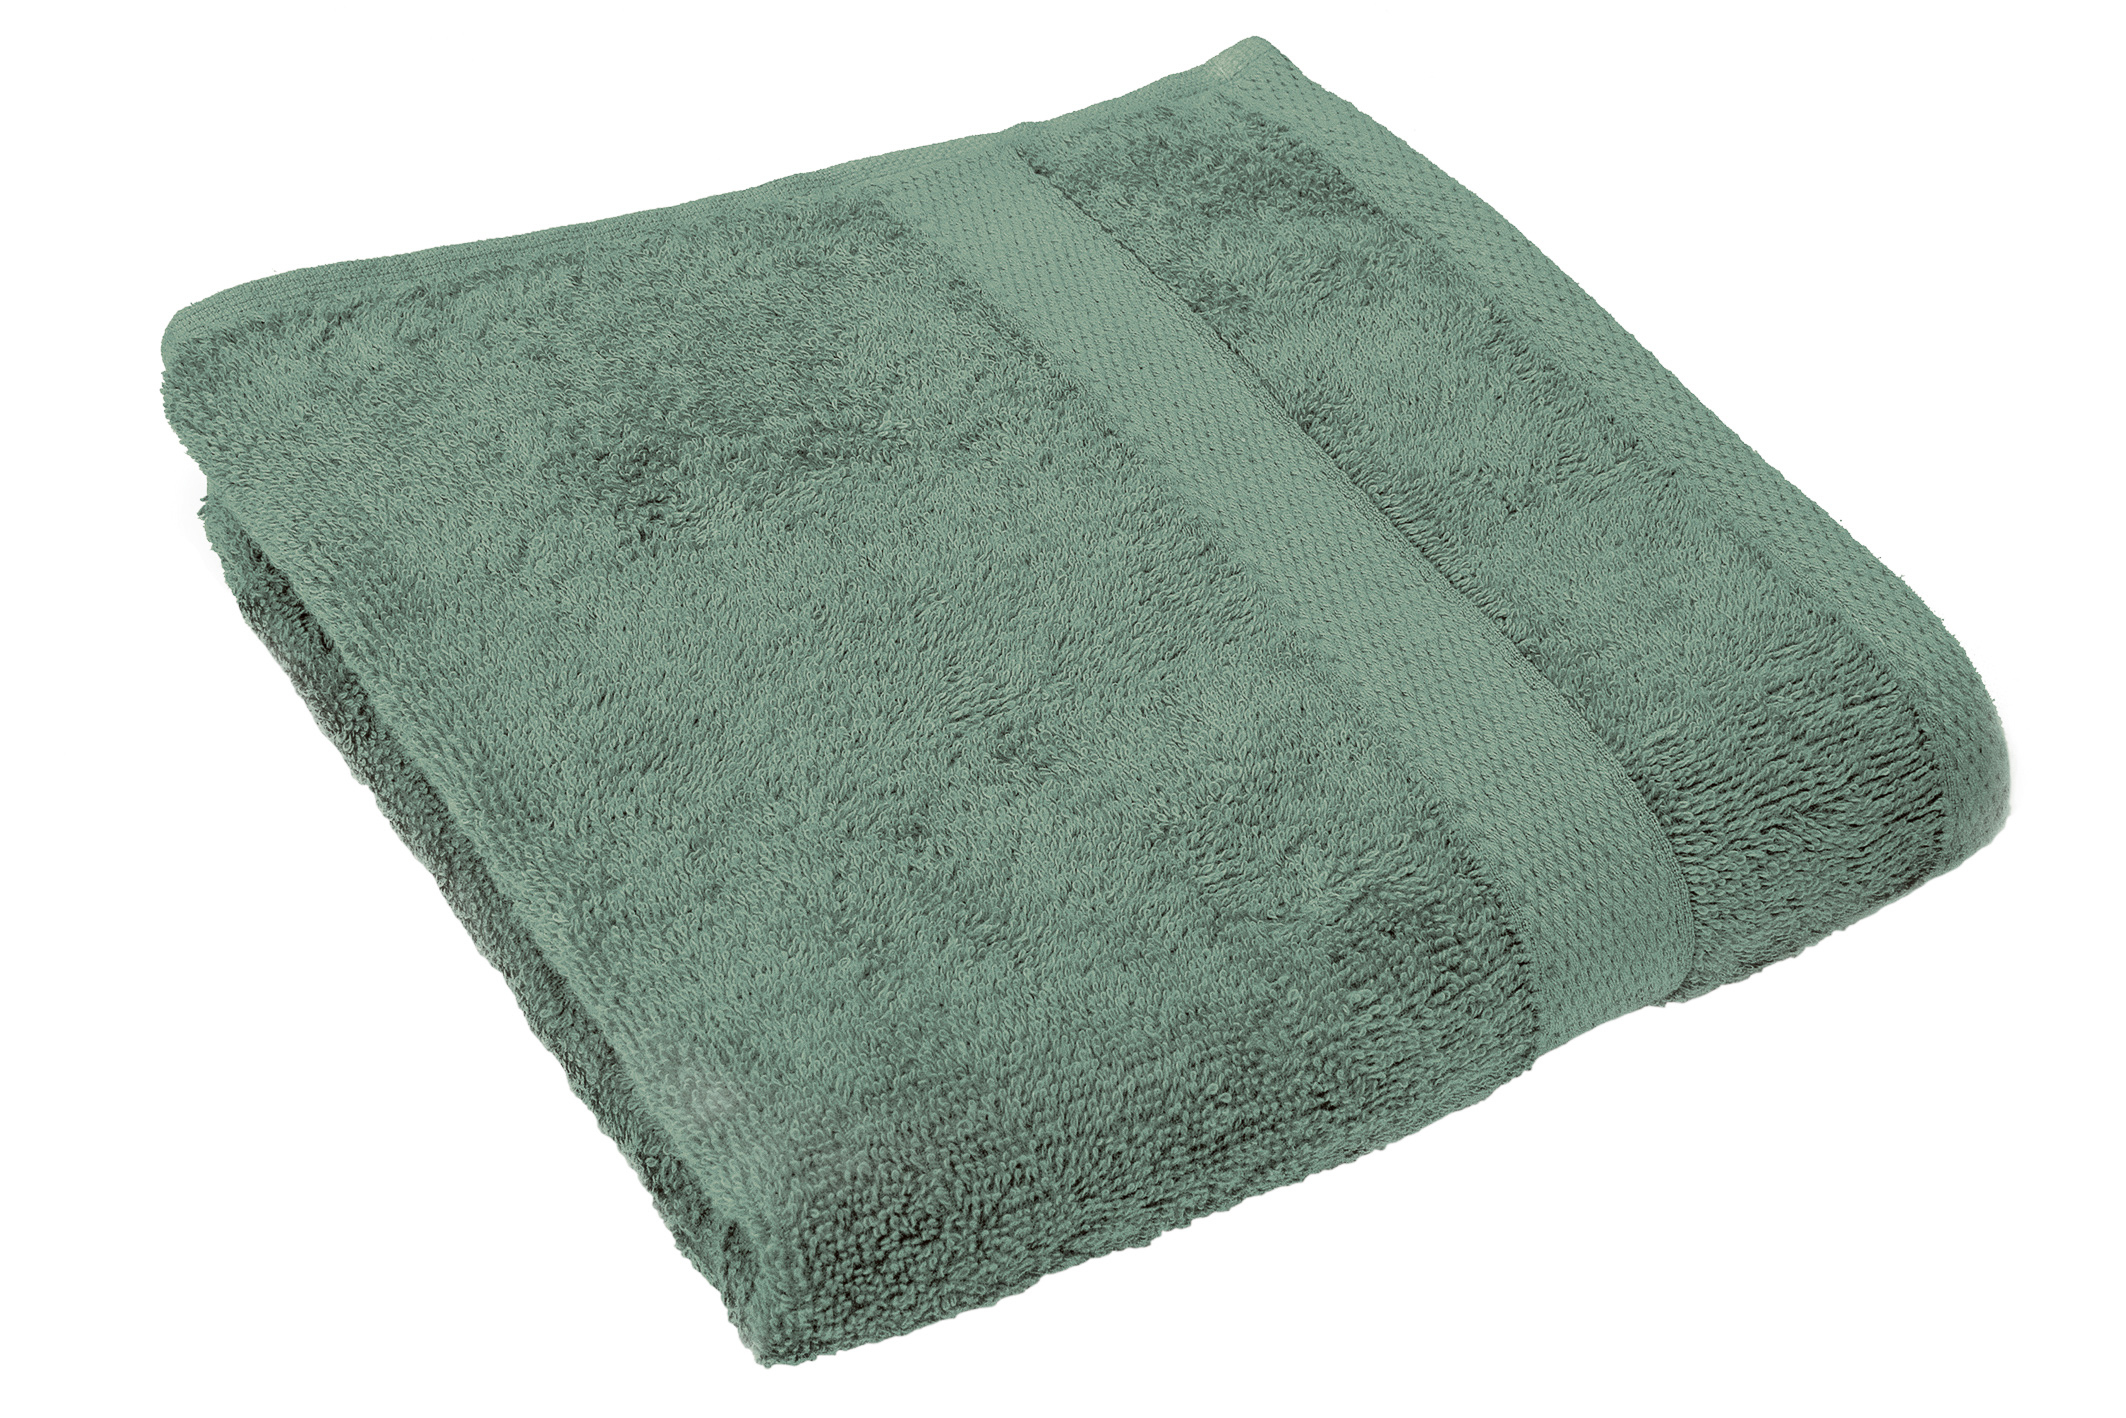 Shower towel 100x150cm, stone green